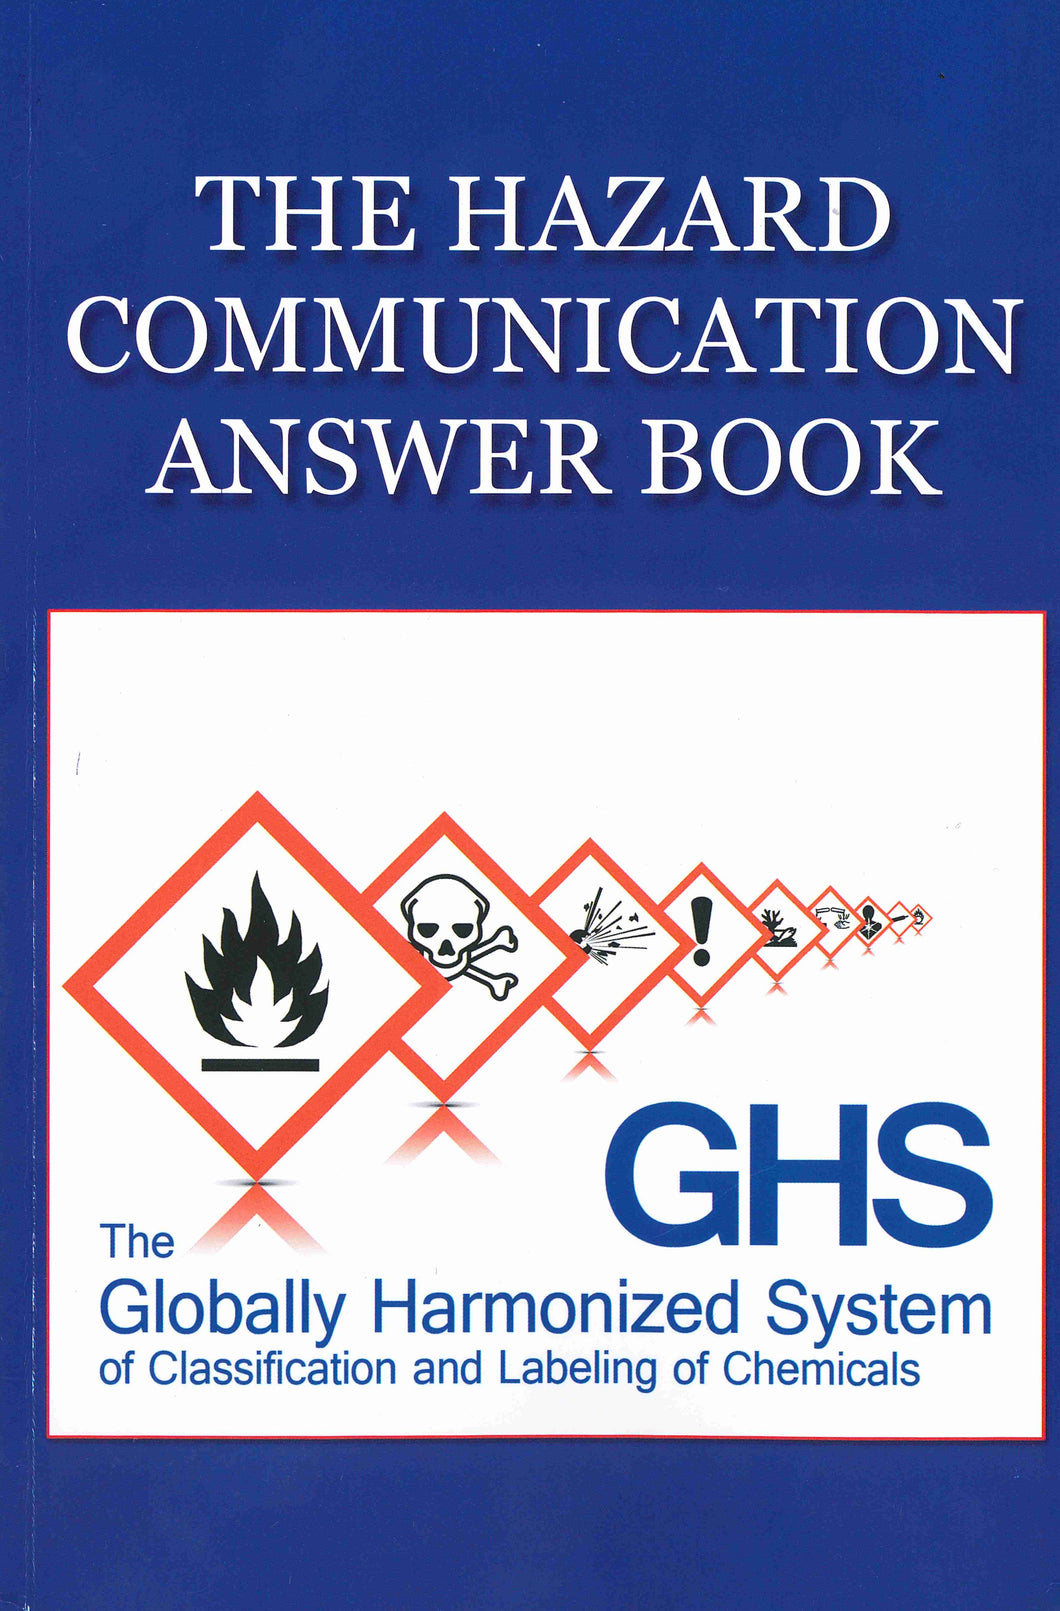 The Hazard Communication Answer Book by Mark Moran